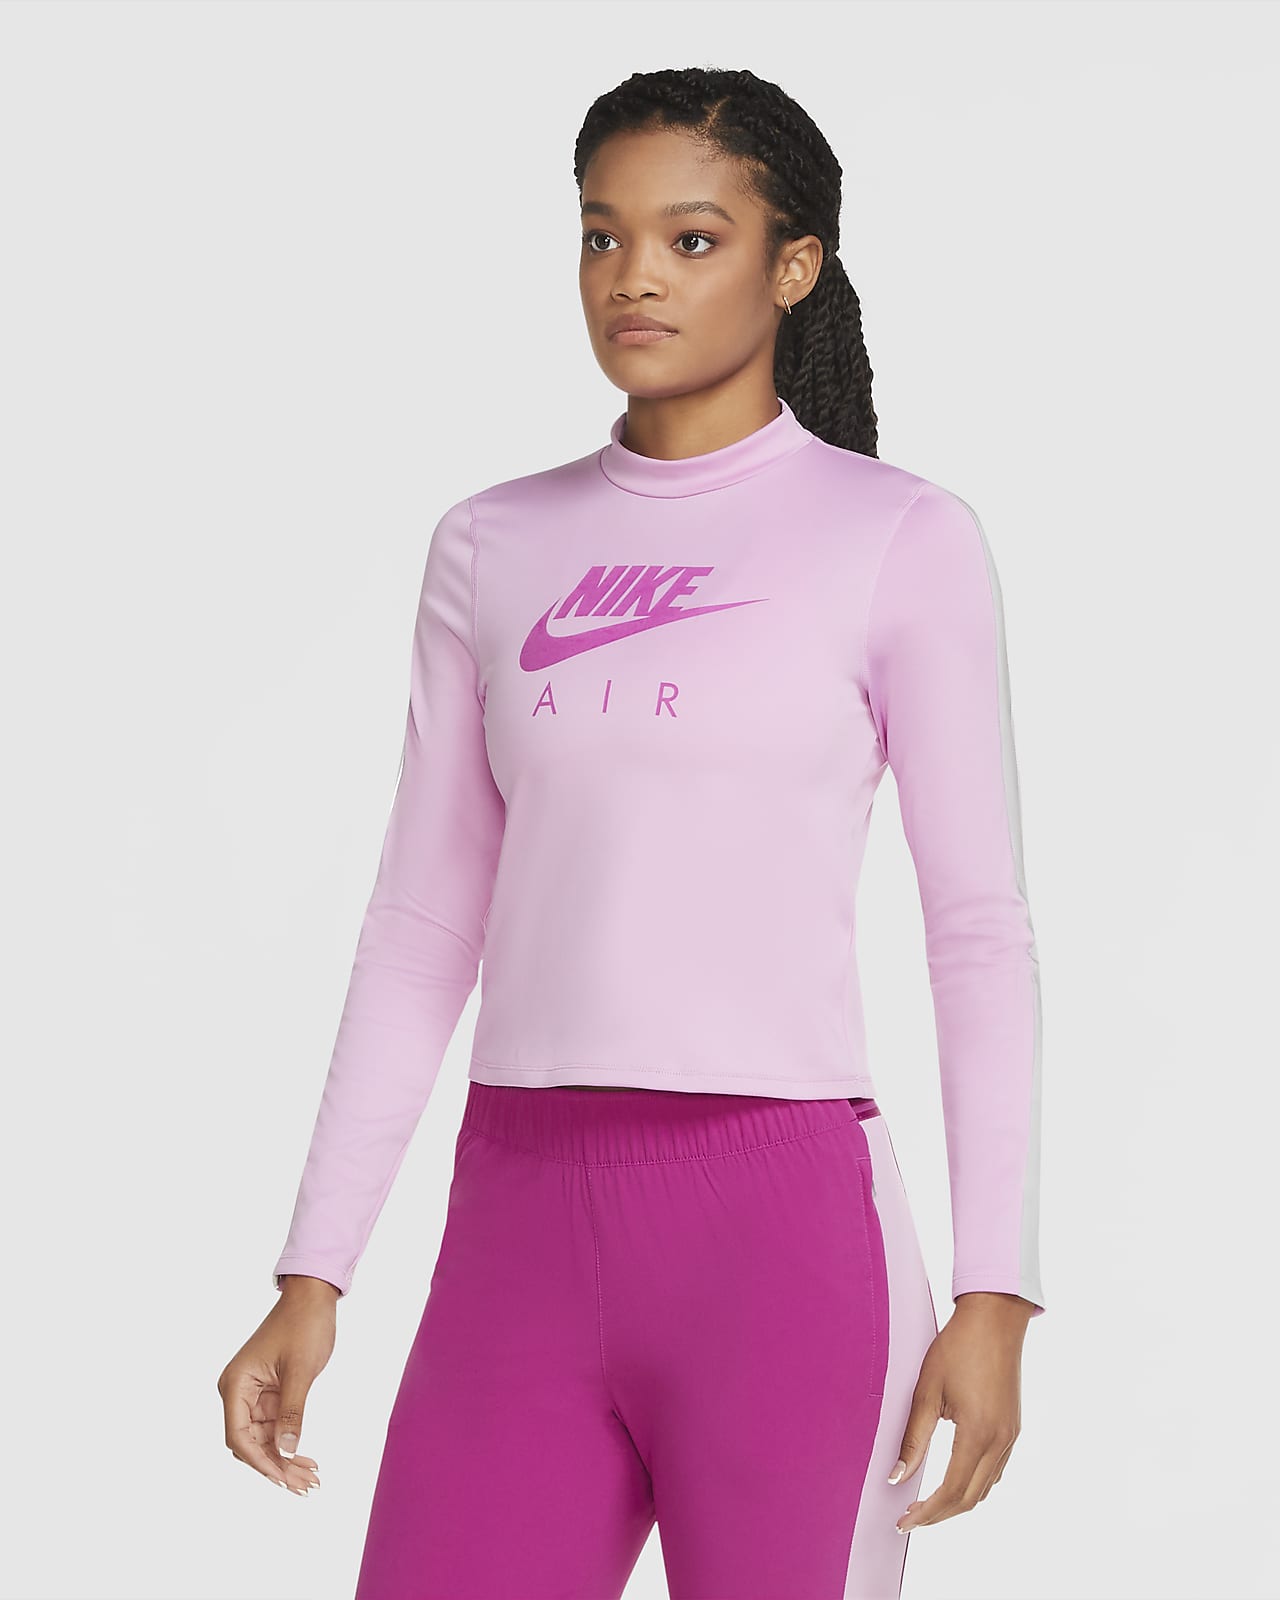 womens pink nike running top